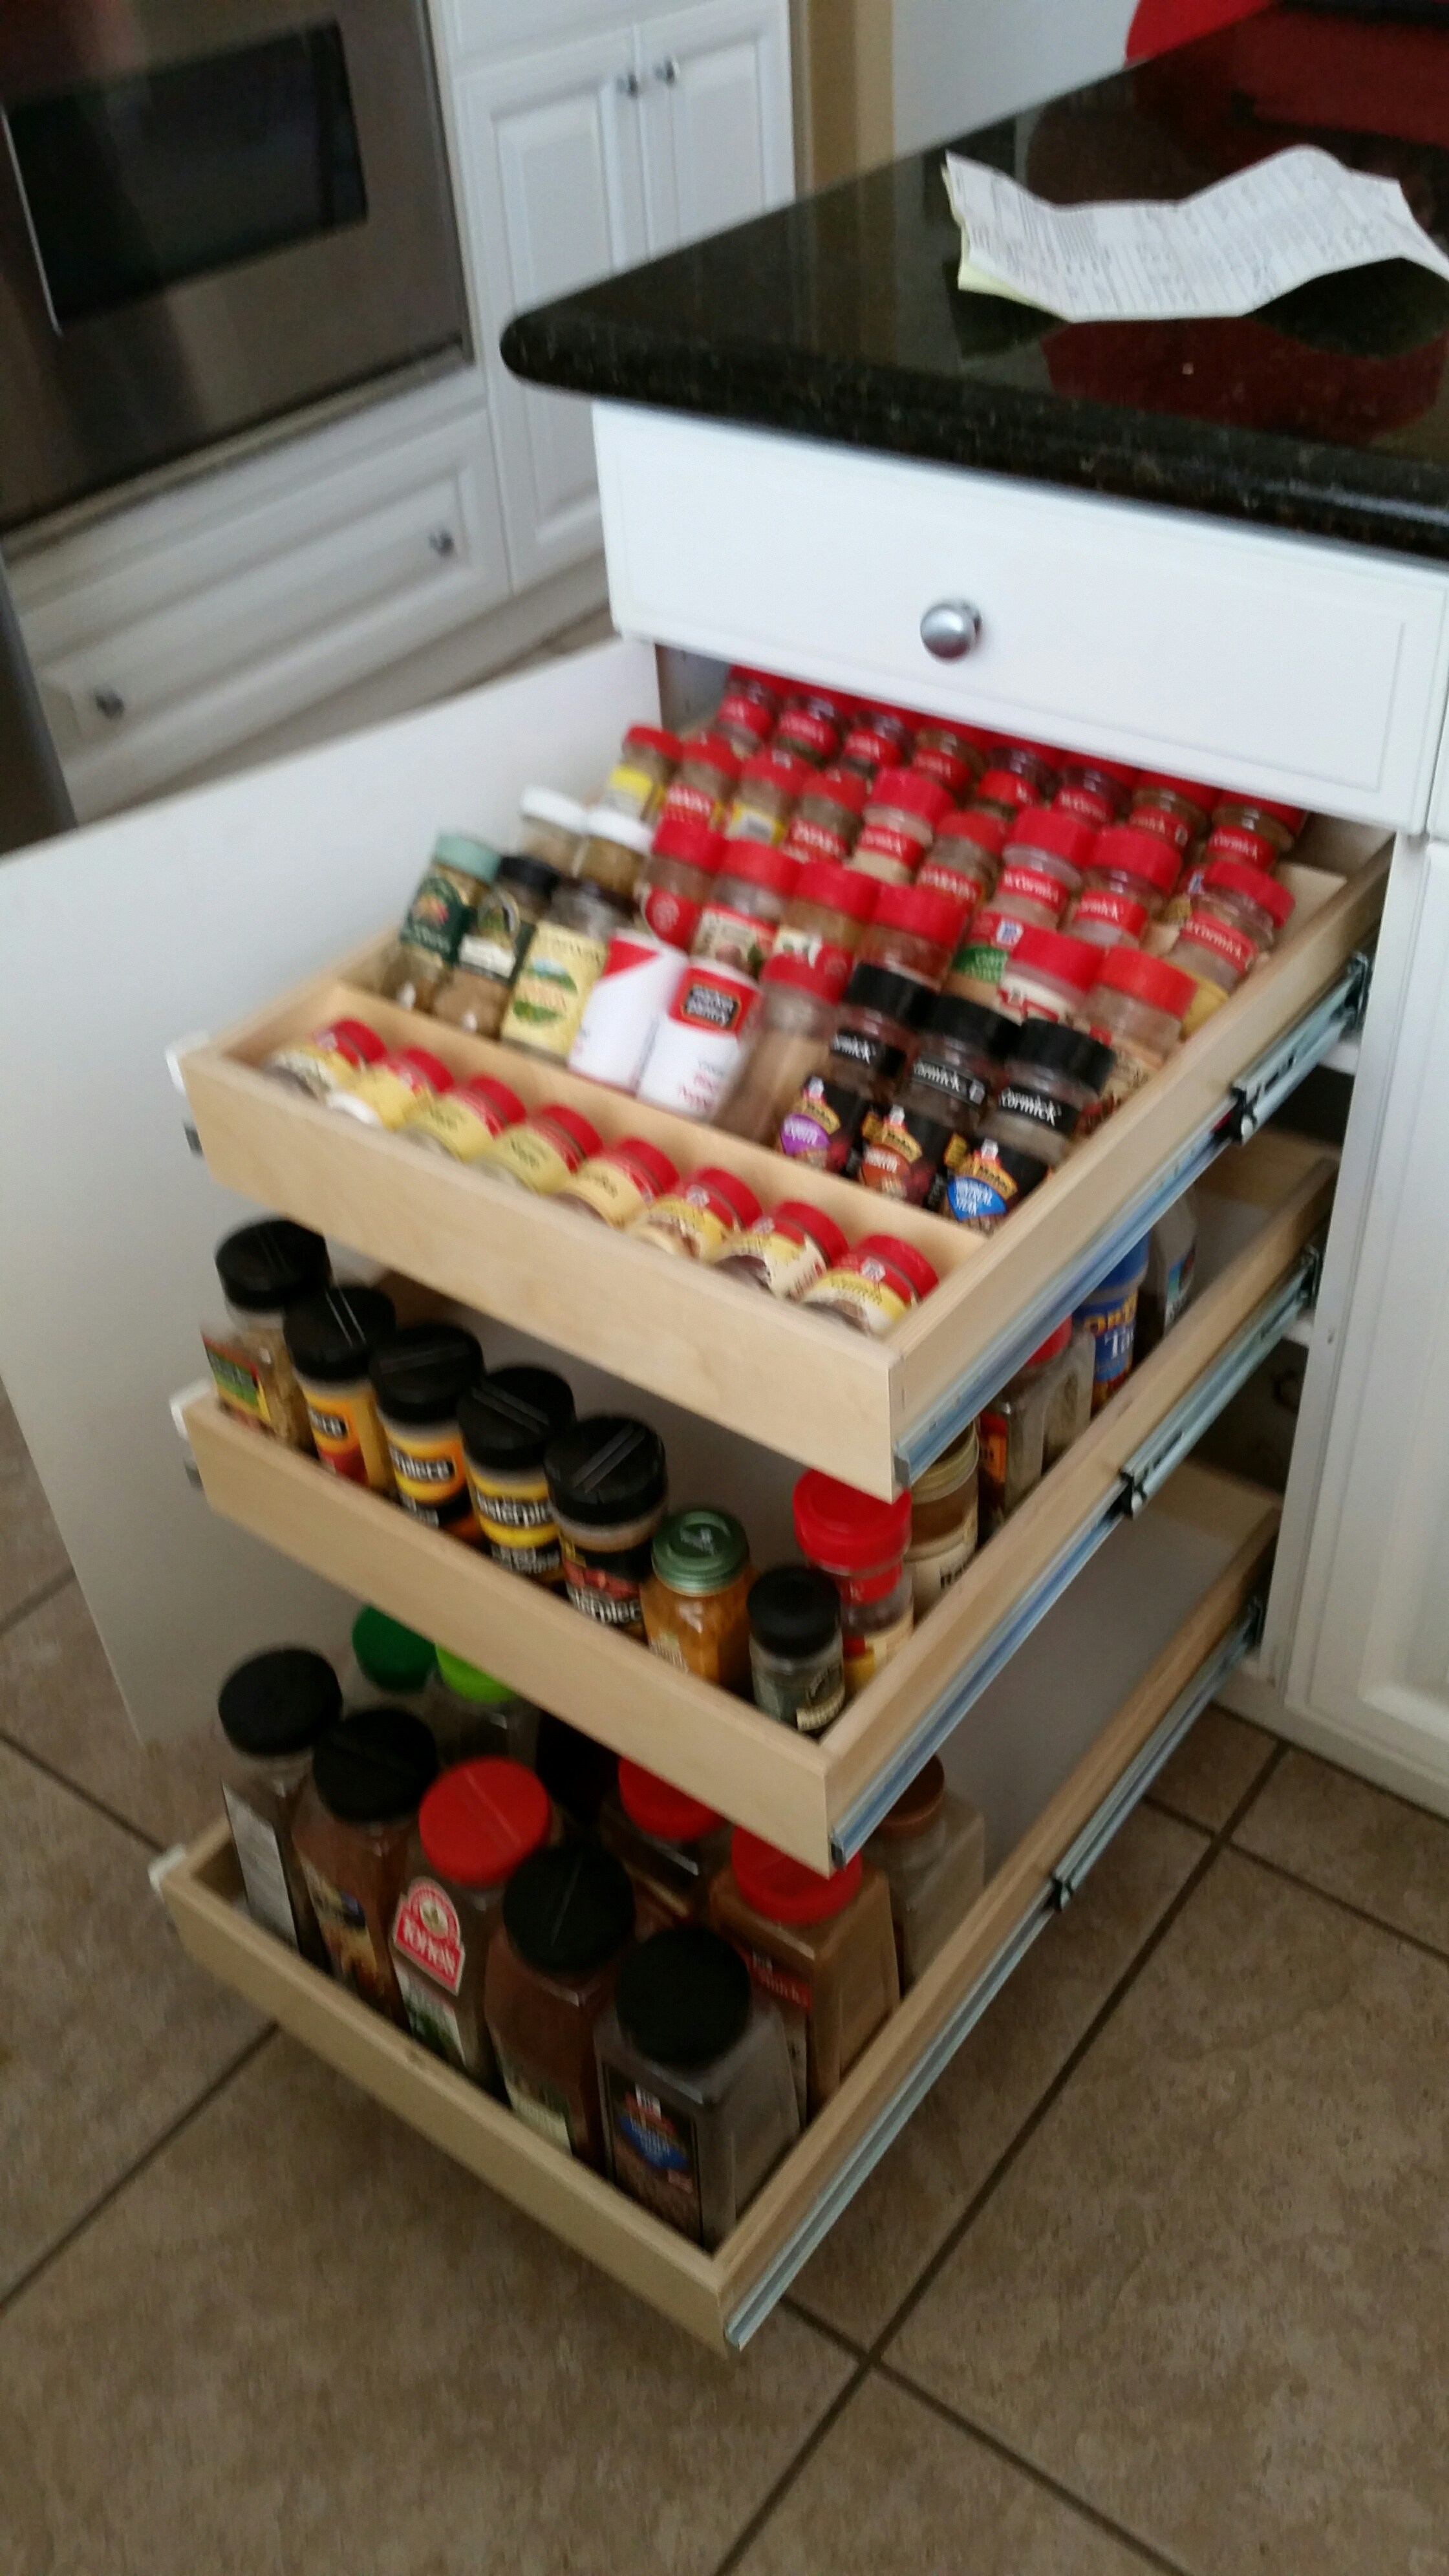 Kitchen Organization - Pull Out Shelves in Pantry - Remodelando la